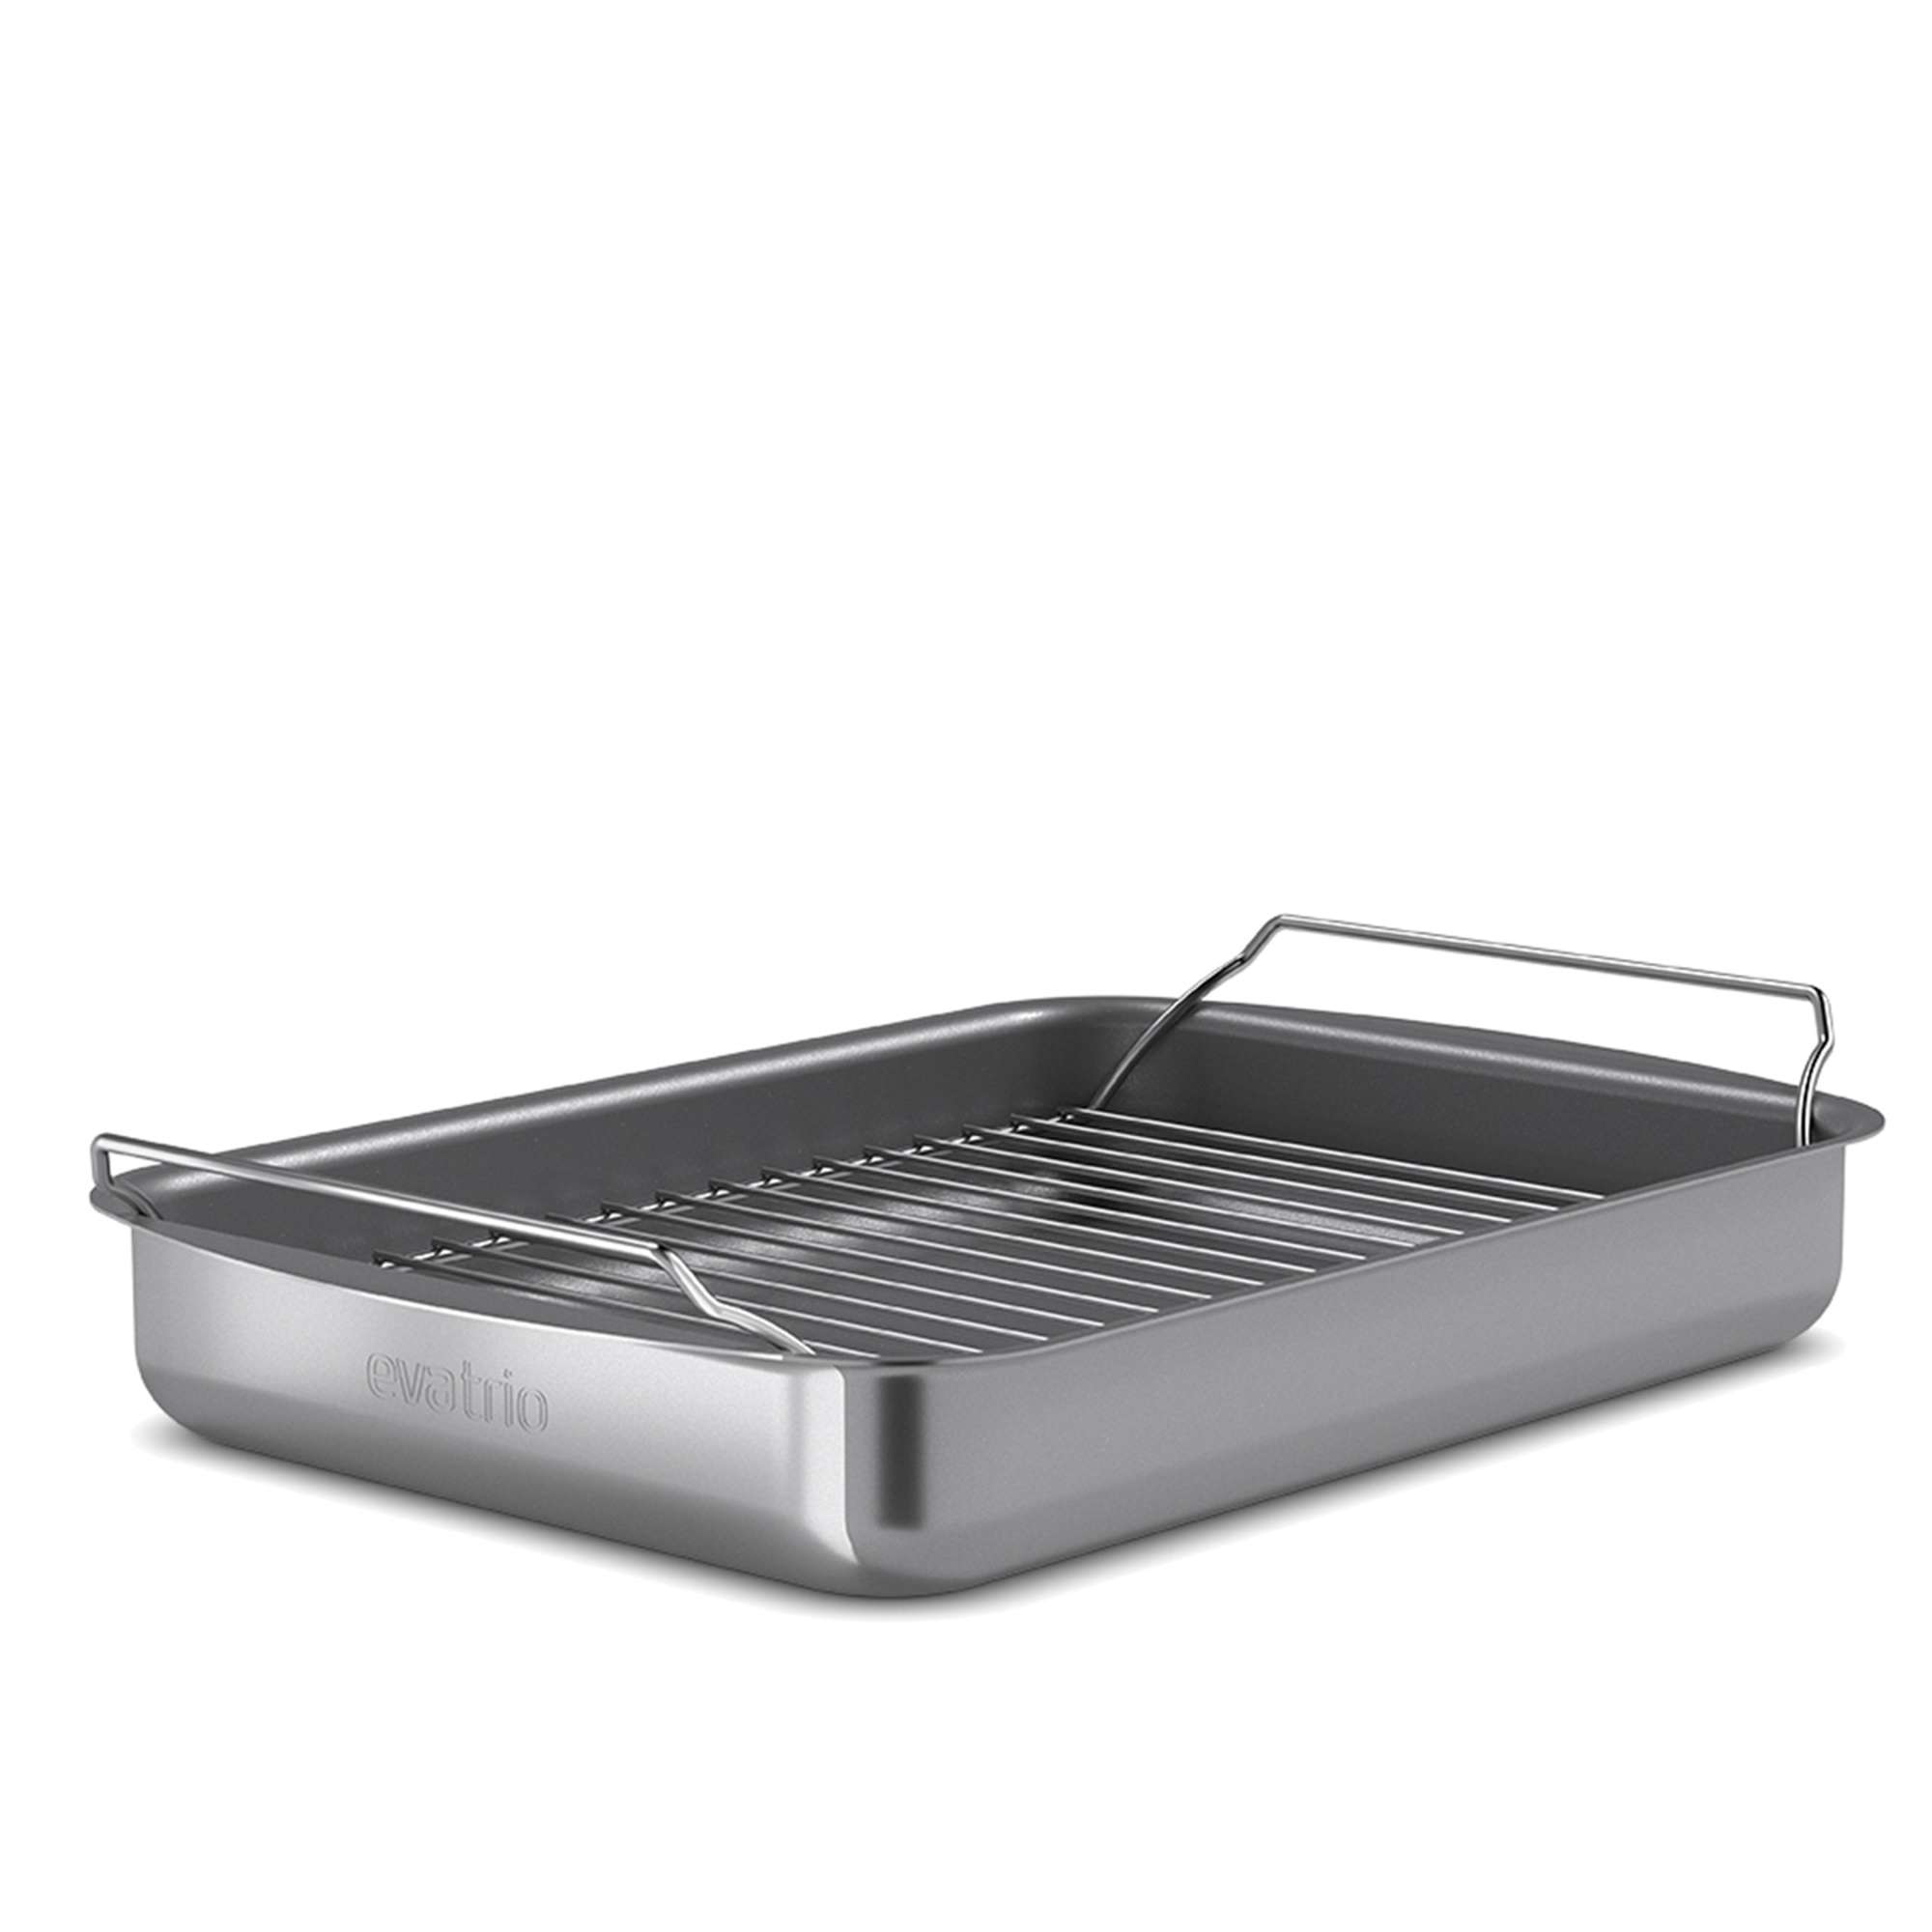 Professional roasting pan with rack - 35x25 cm - ceramic Slip-Let® coating